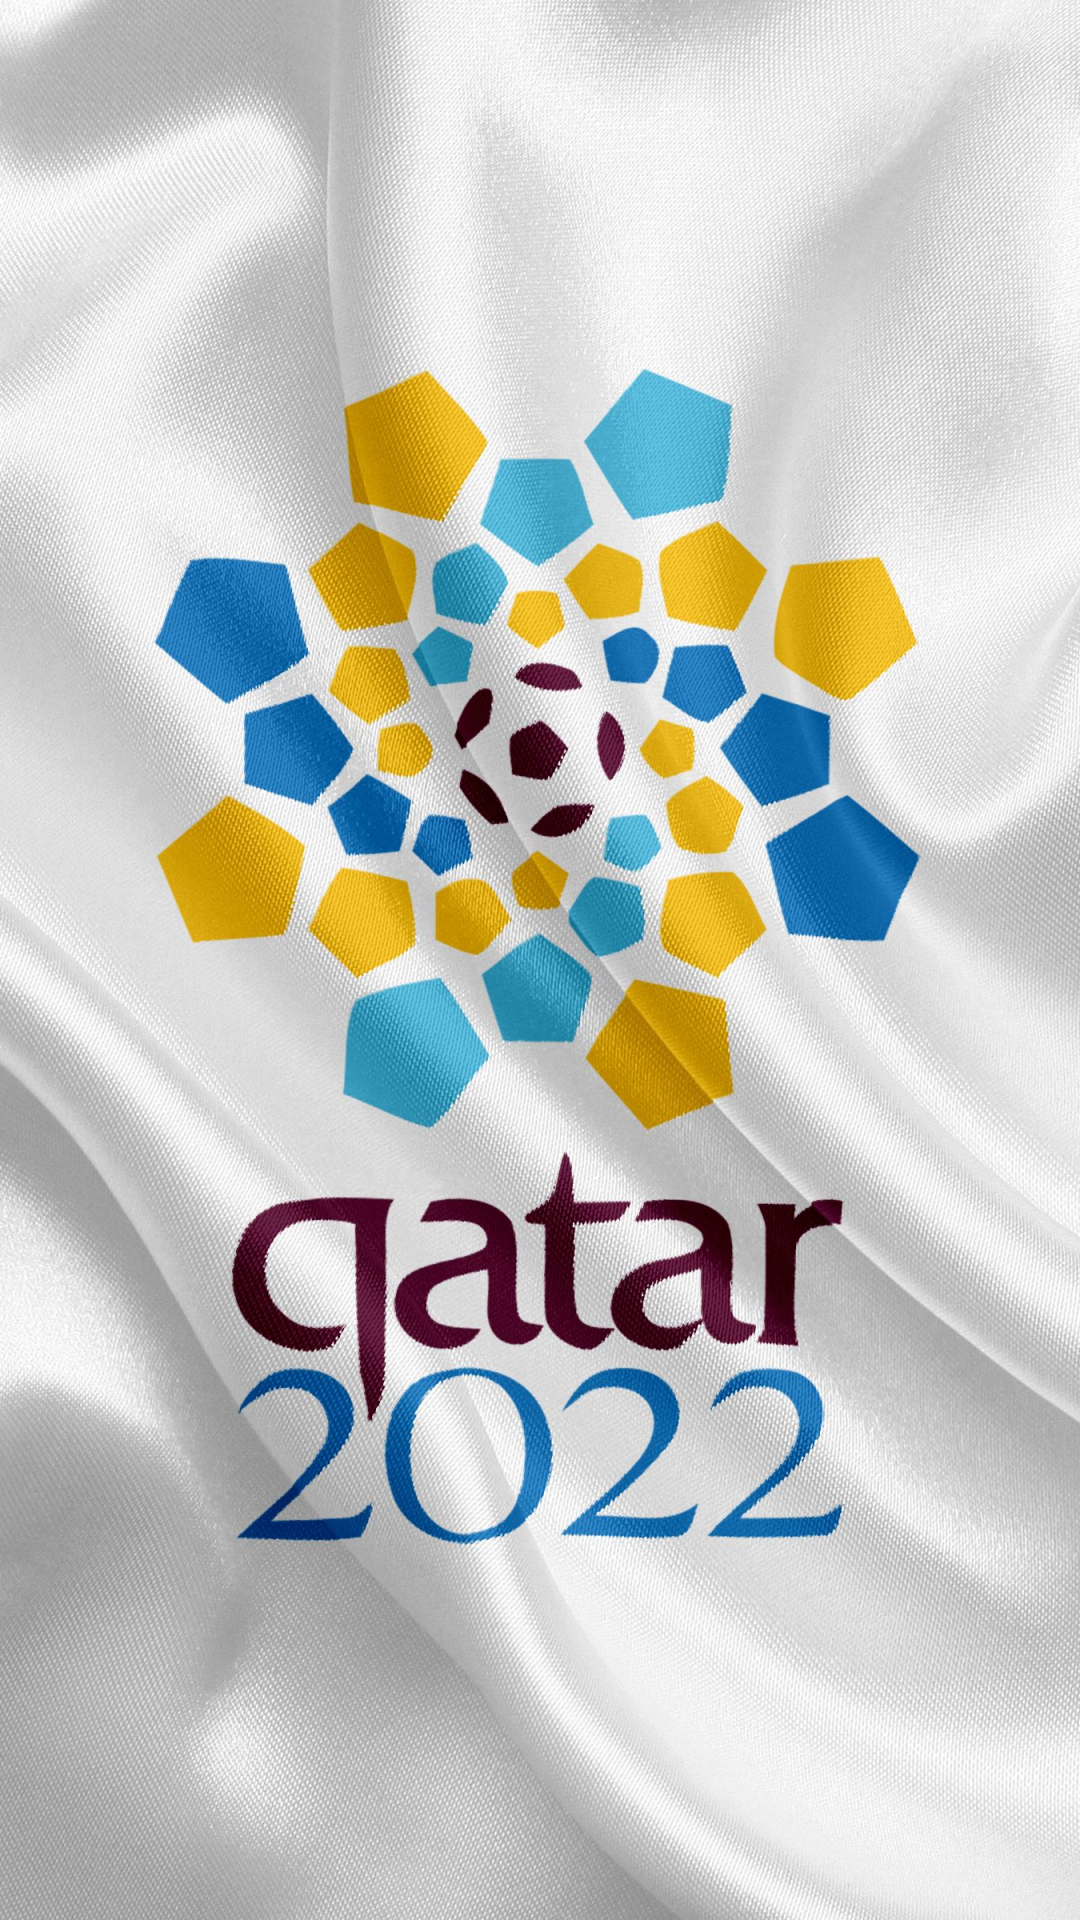 2022 FIFA World Cup Phone Wallpaper